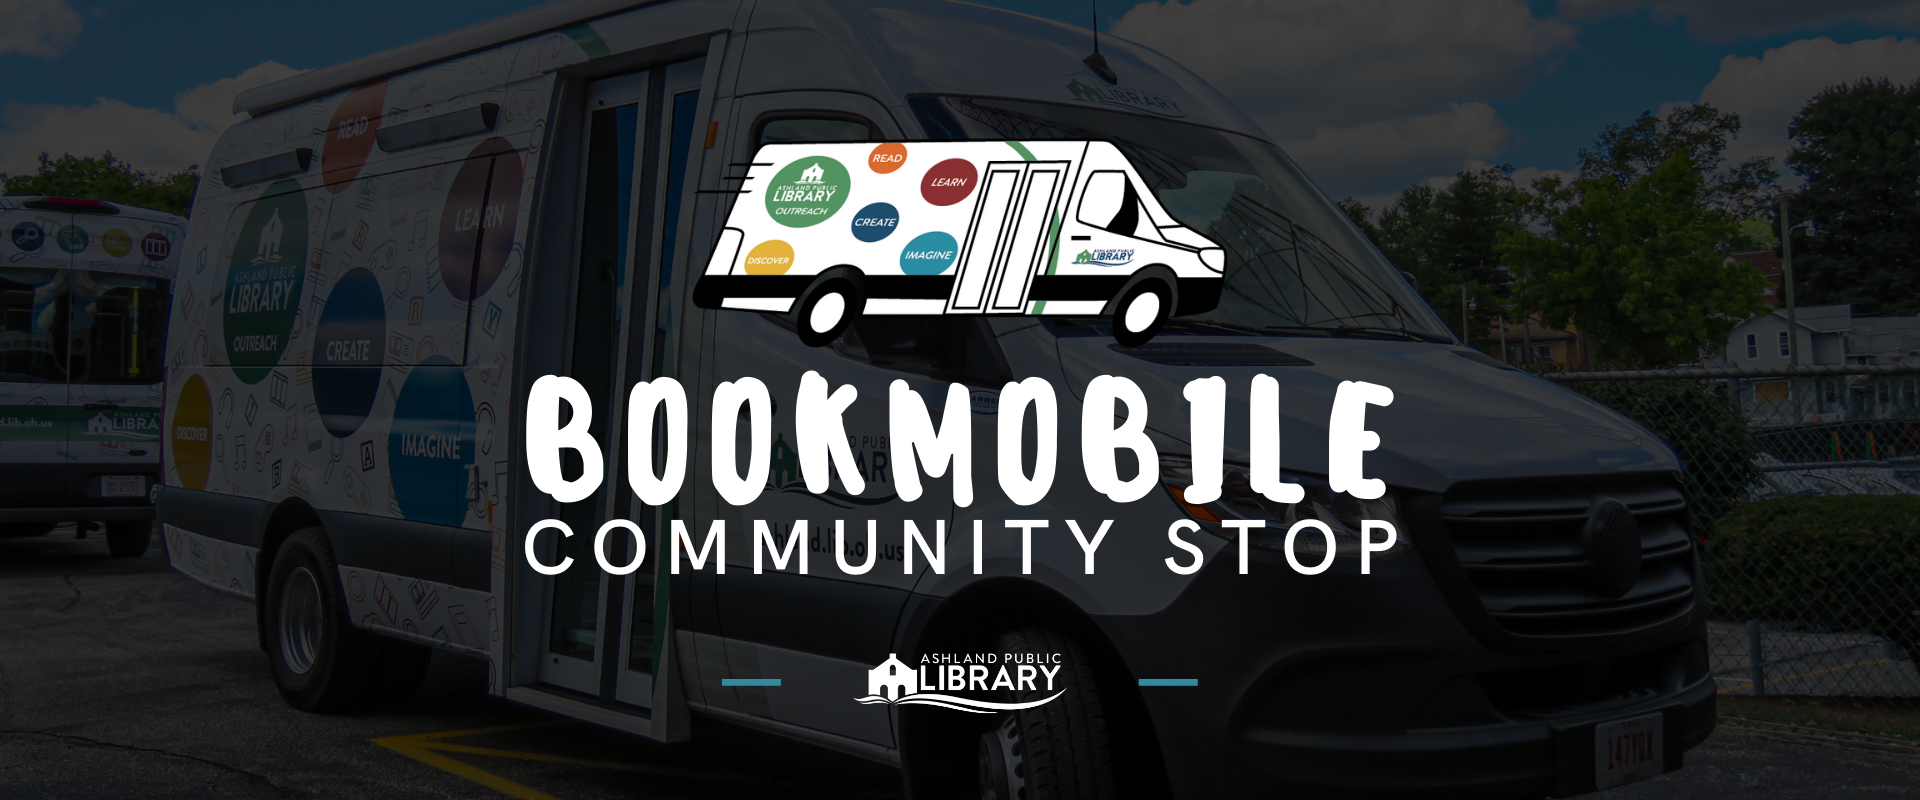 Bookmobile Community Stop